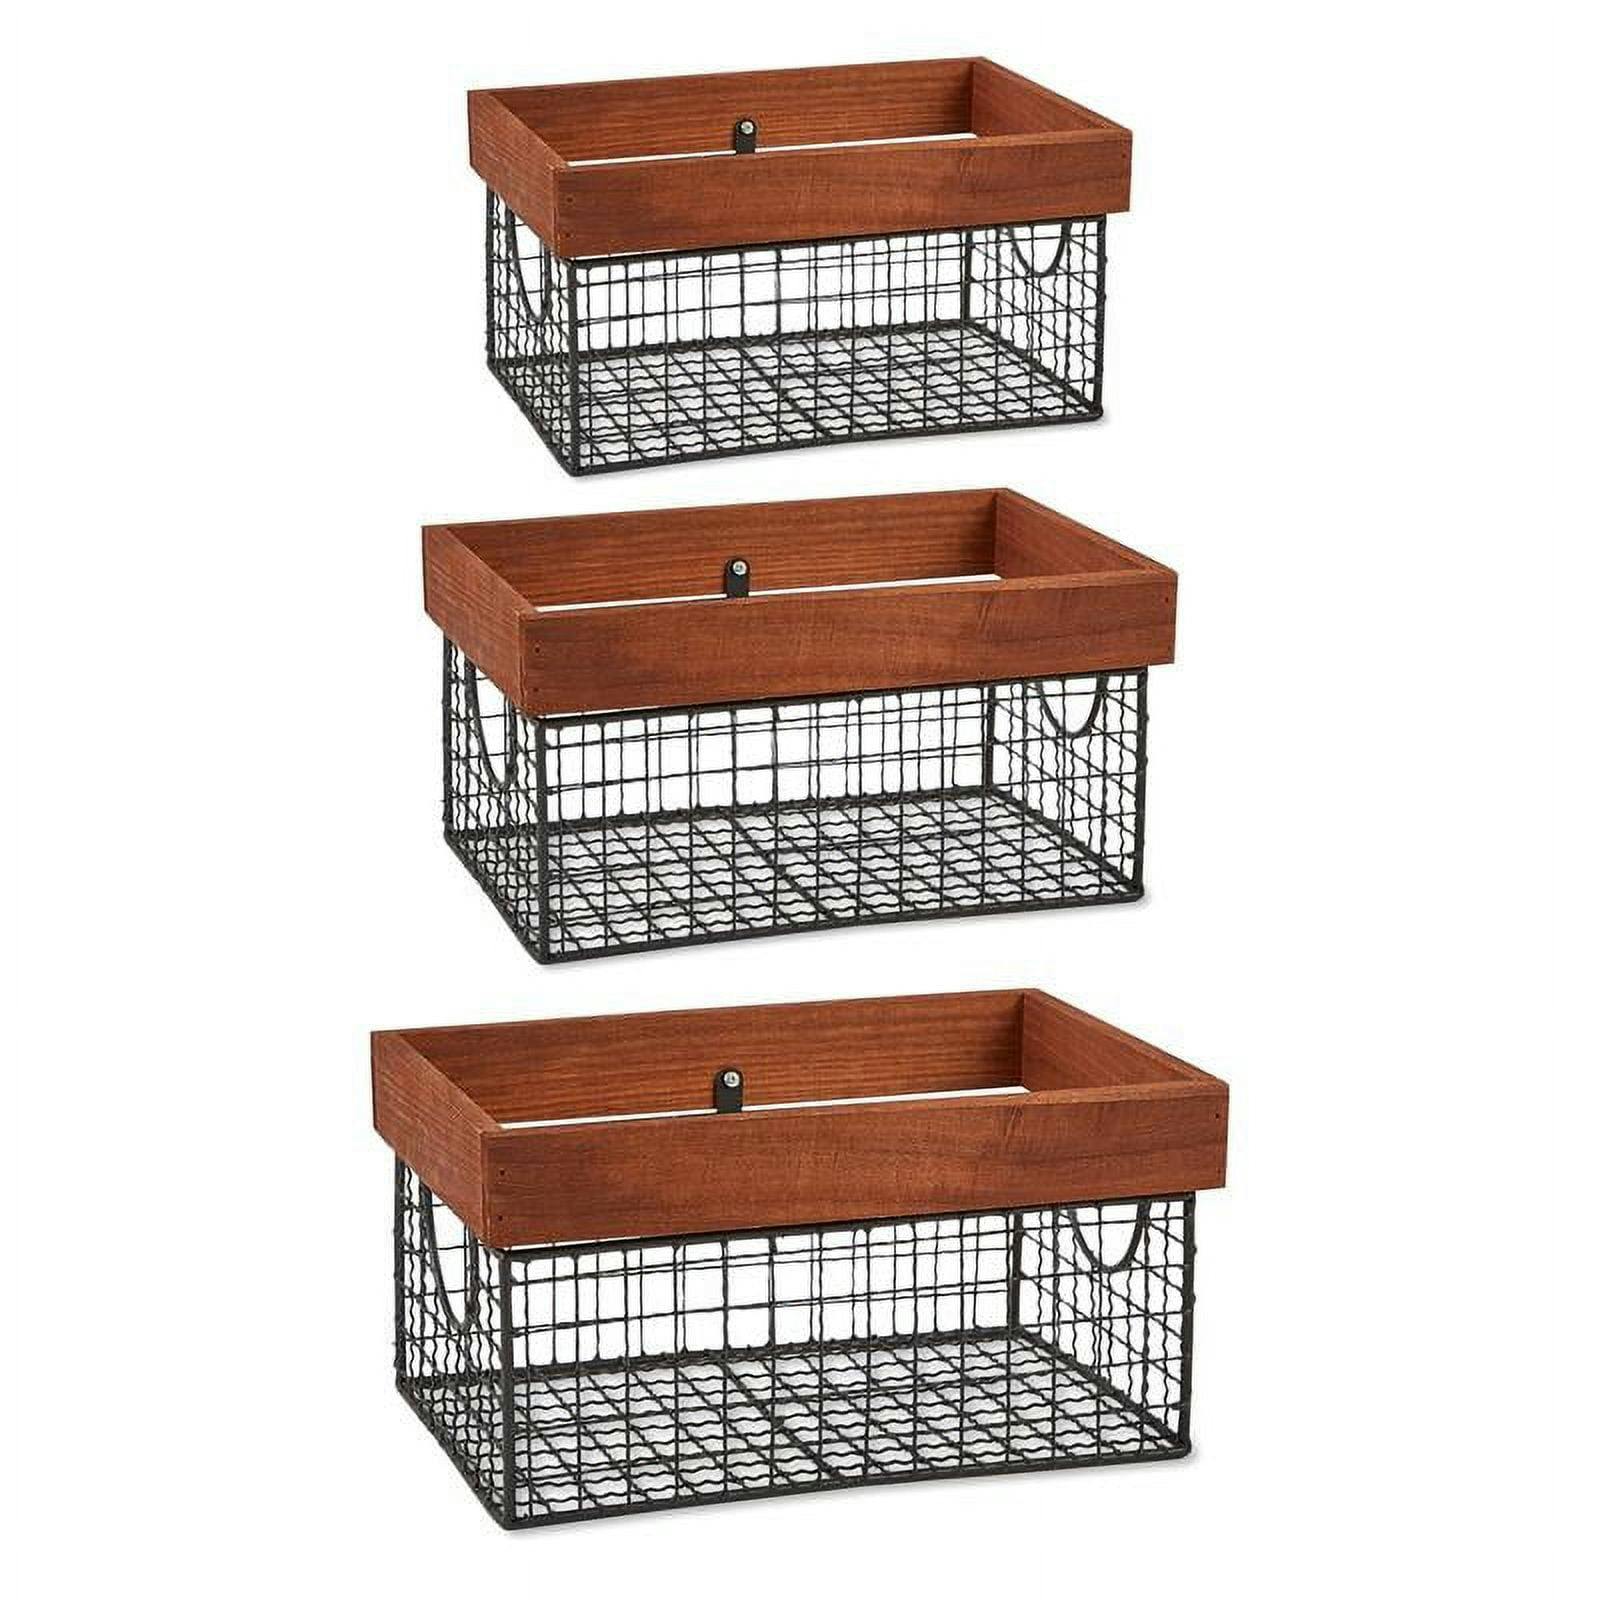 Rustic Bronze and Wood Nesting Kitchen Storage Baskets, Set of 3